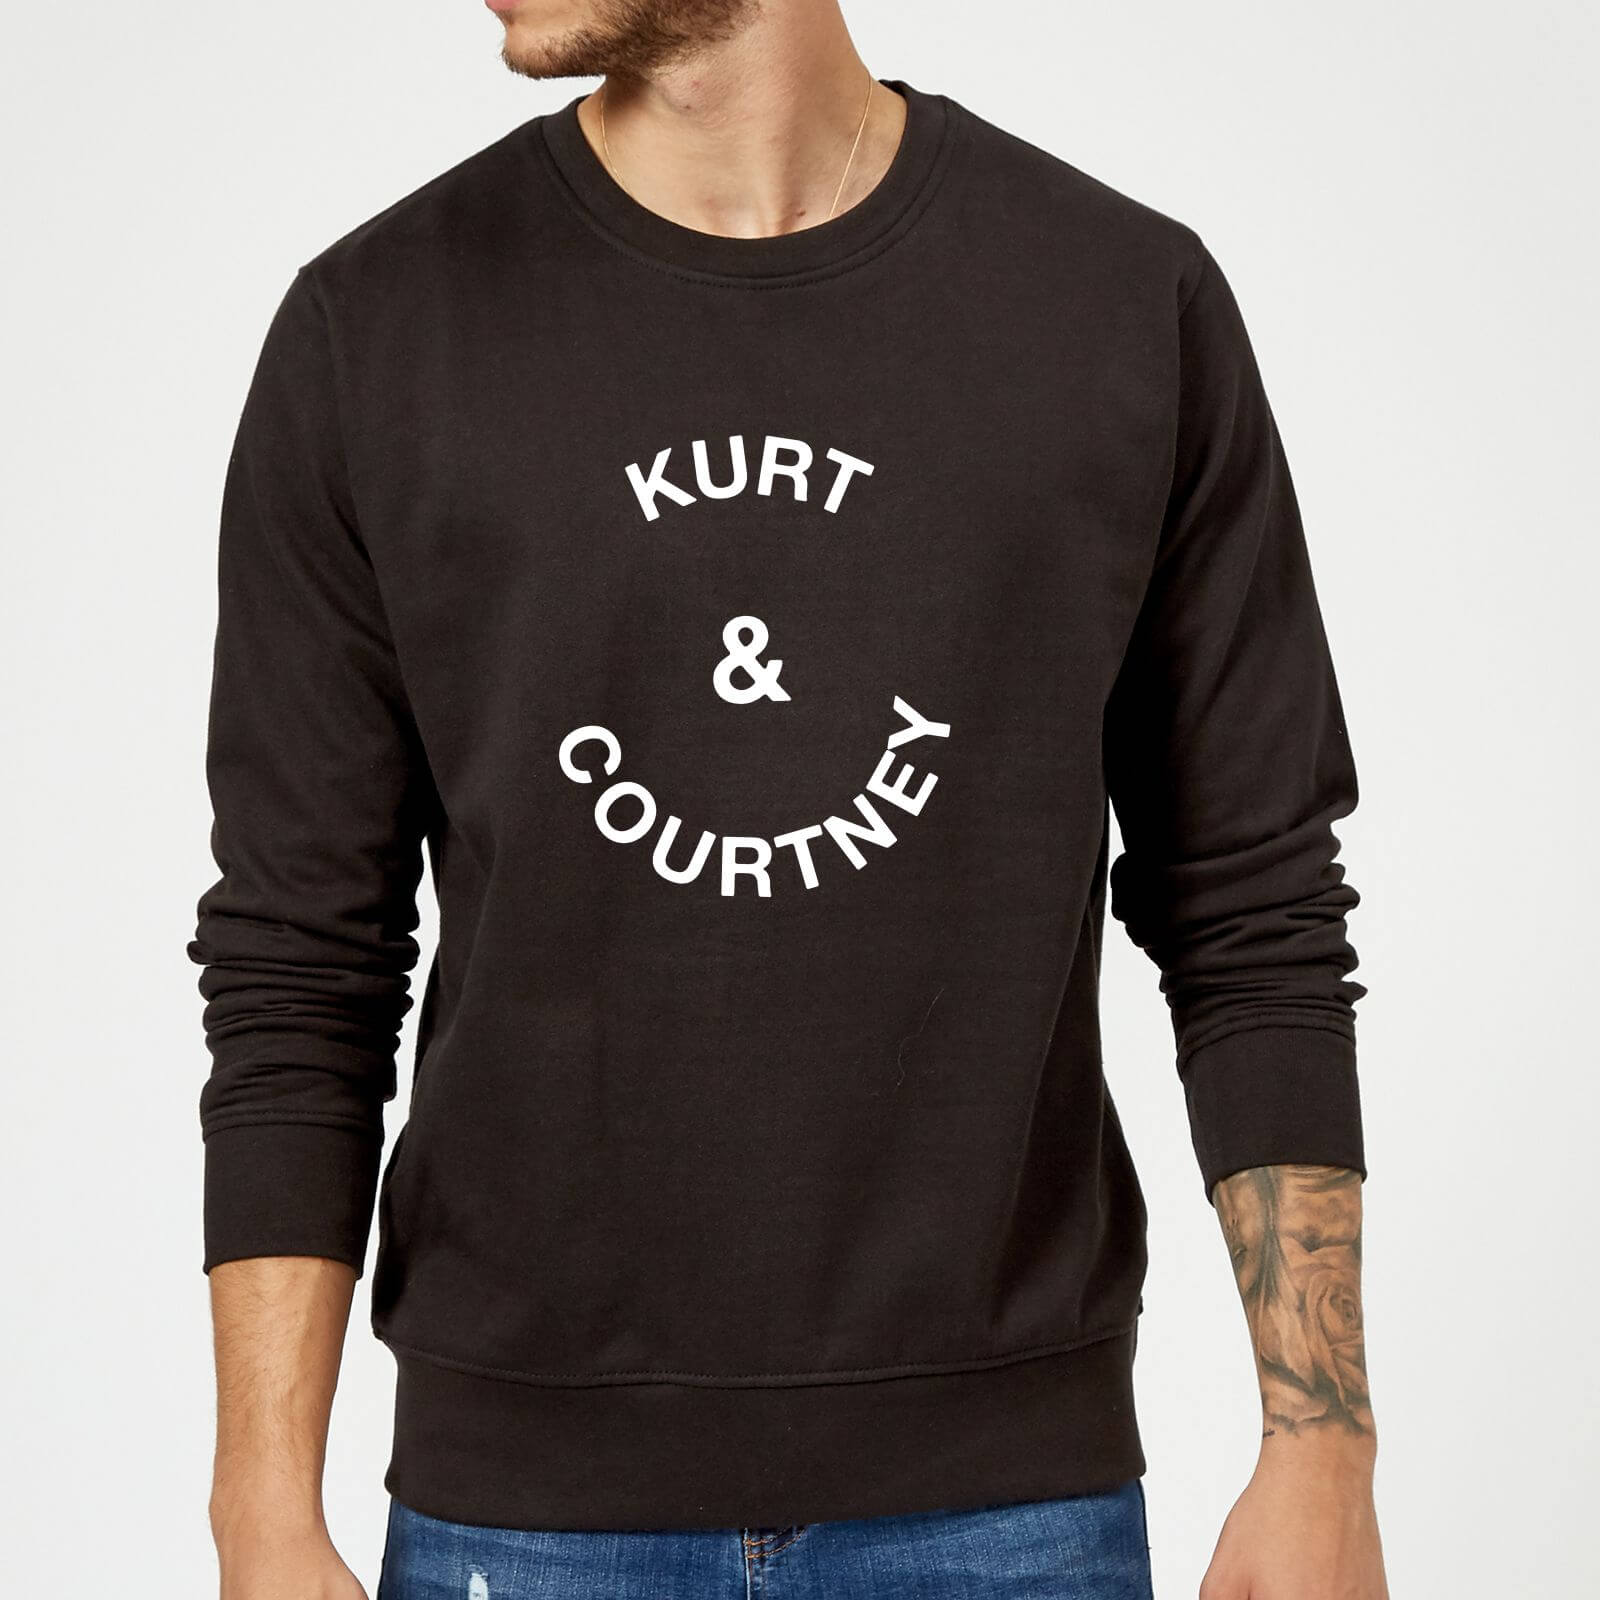 Kurt & Courtney Sweatshirt - Black - L - Black